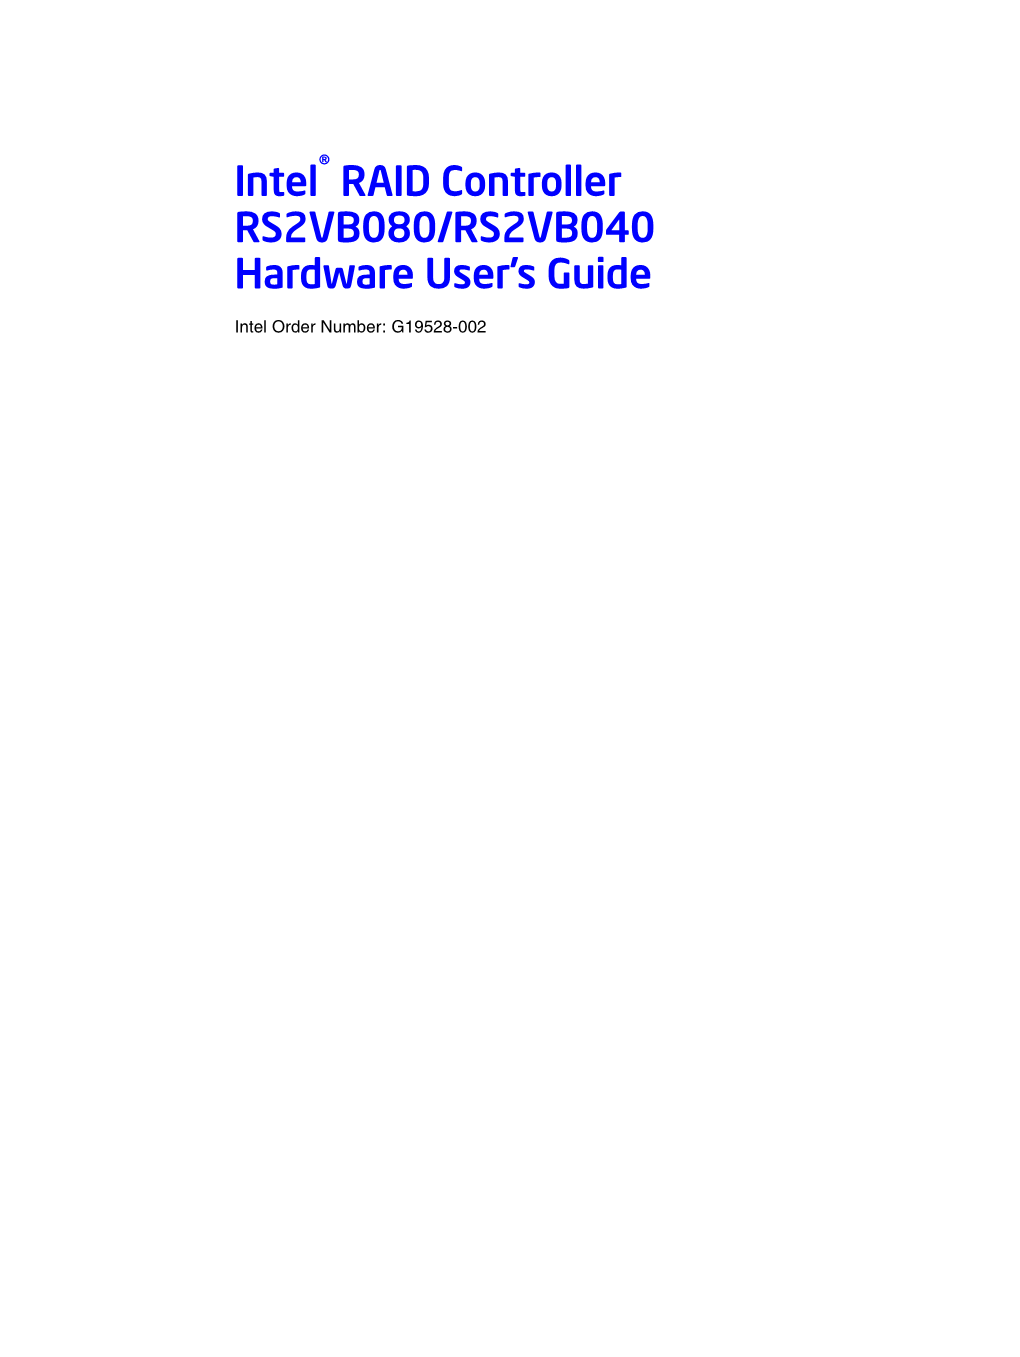 Intel RAID Controller RS2VB080/RS2VB040 Hardware